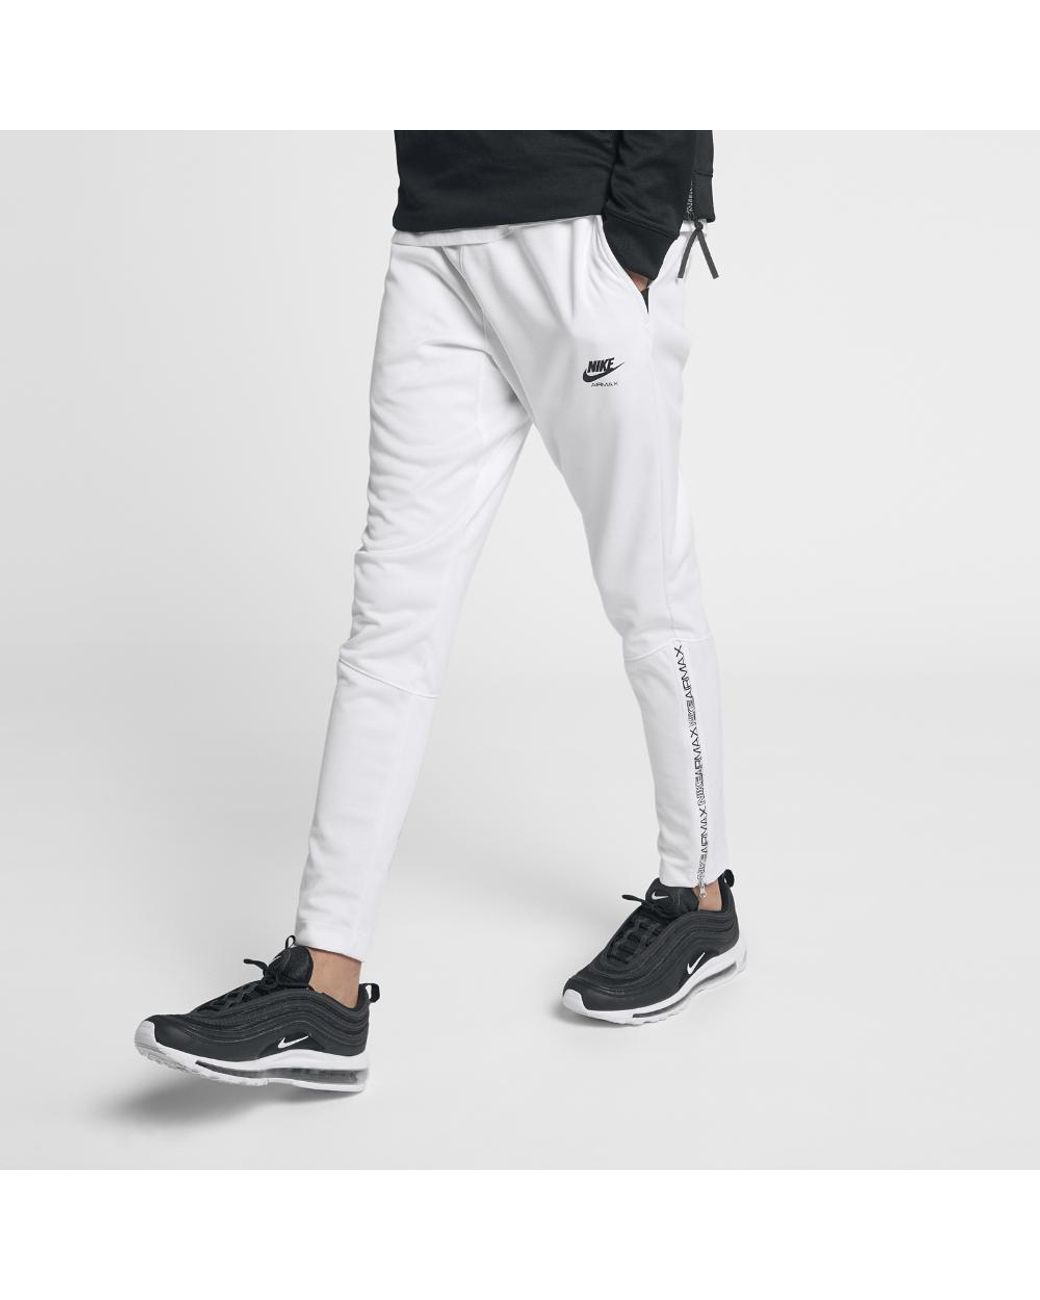 Nike Sportswear Air Max Men's Joggers in White for Men